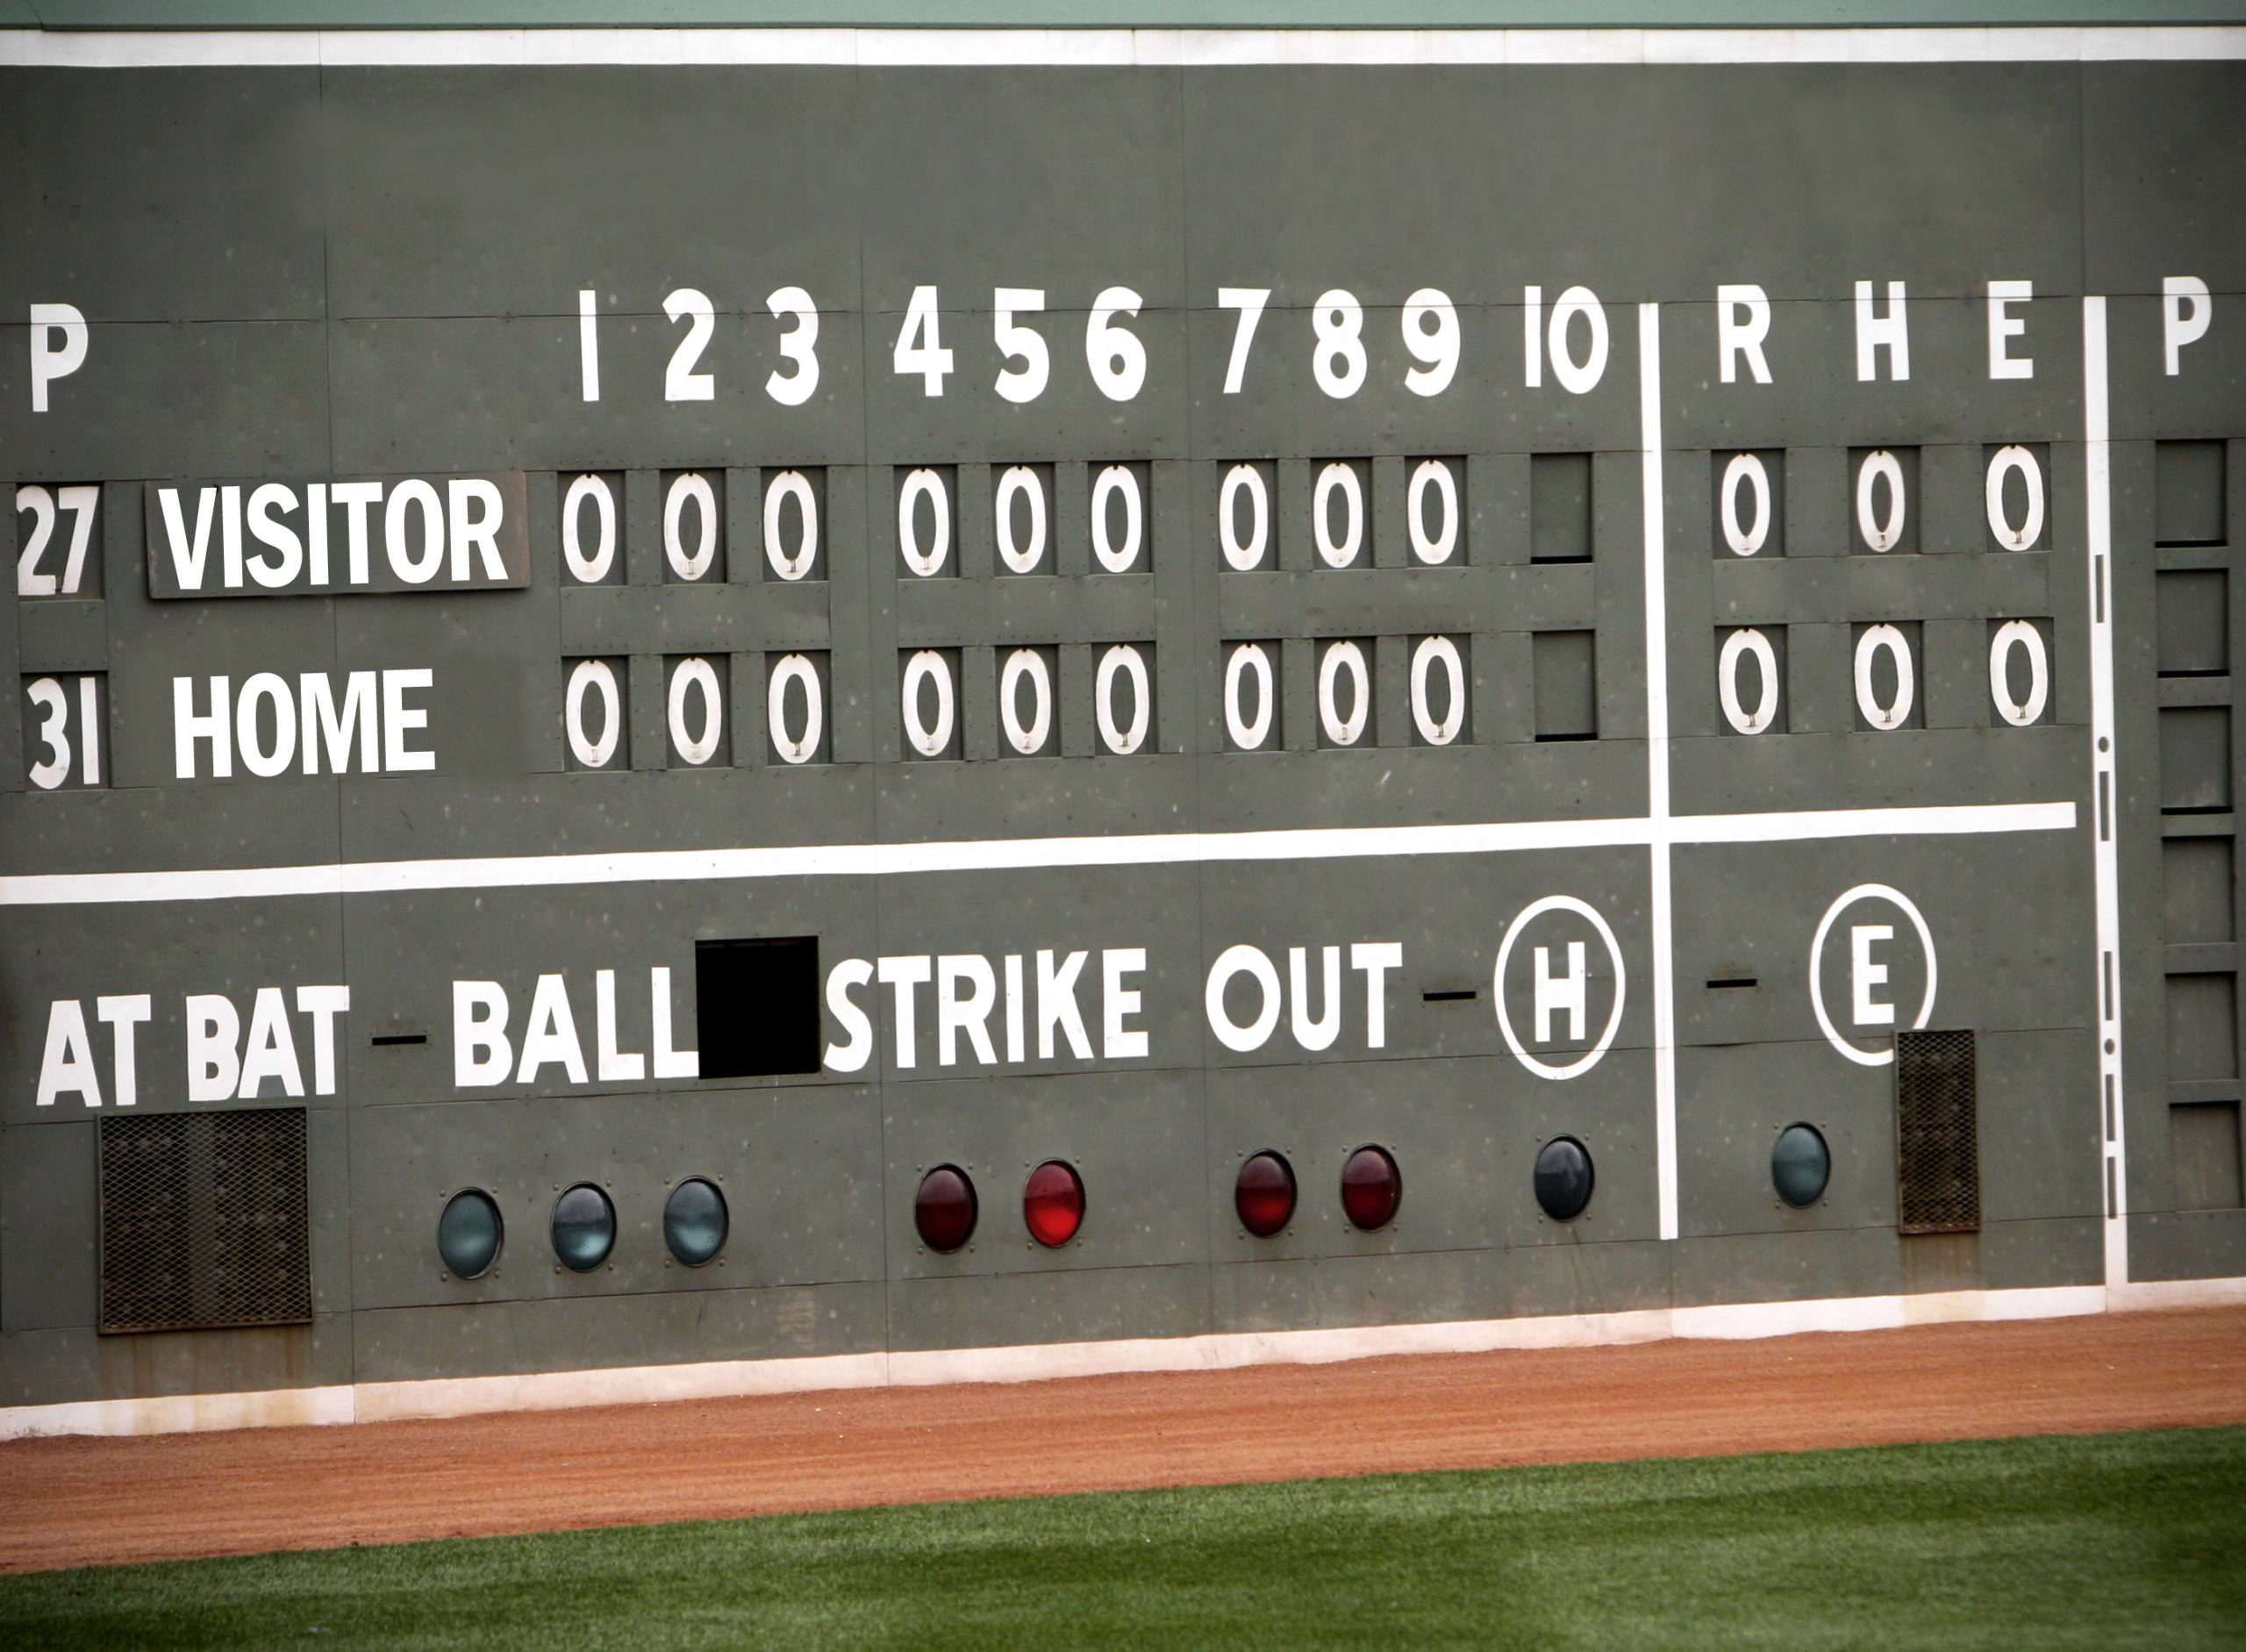 old fashioned baseball scoreboard.